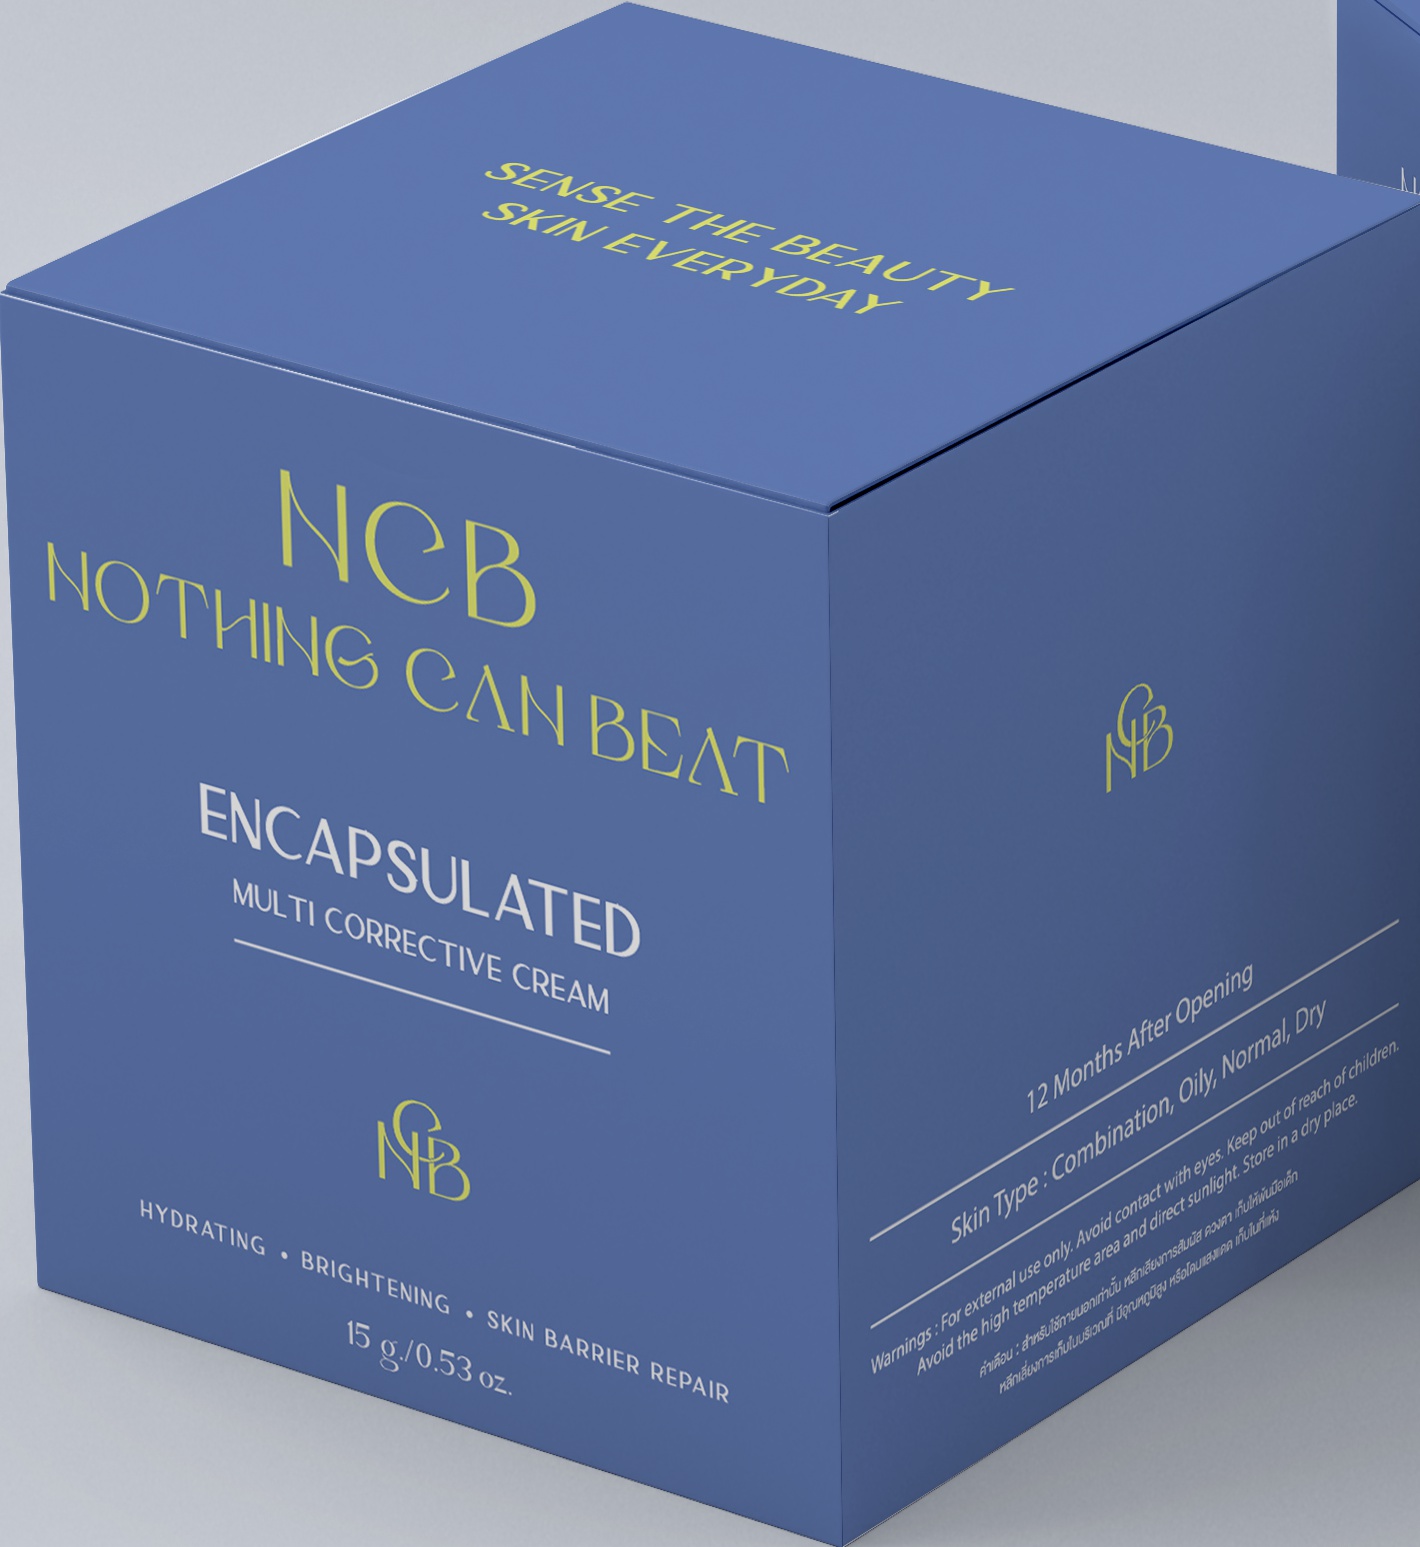 NCB Nothing Can Beat Encapsulated Multi Corrective Cream